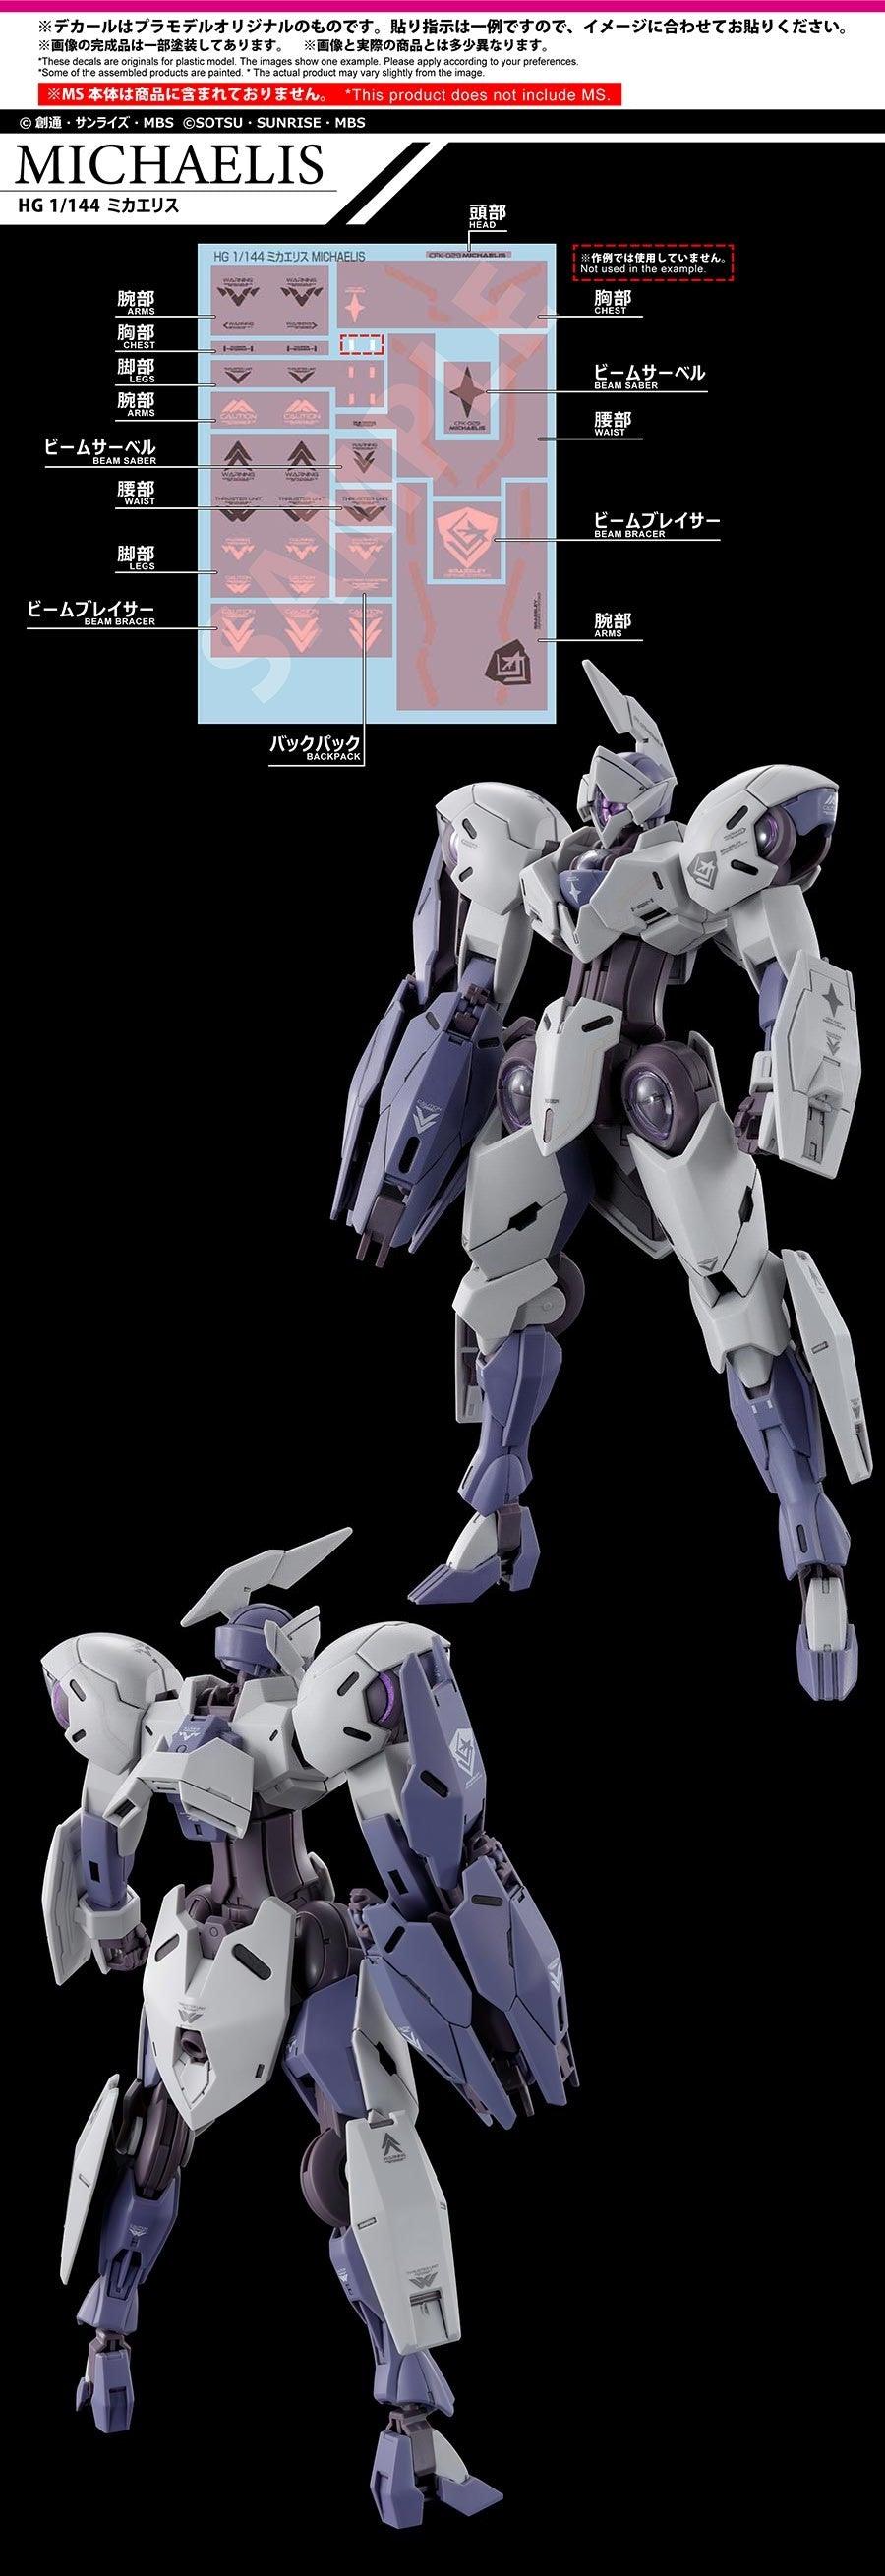 BANDAI GUNDAM DECAL No.134 Mobile Suit Gundam THE WITCH FROM MERCURY MULTIUSE 2 - SaQra Mart Hobby